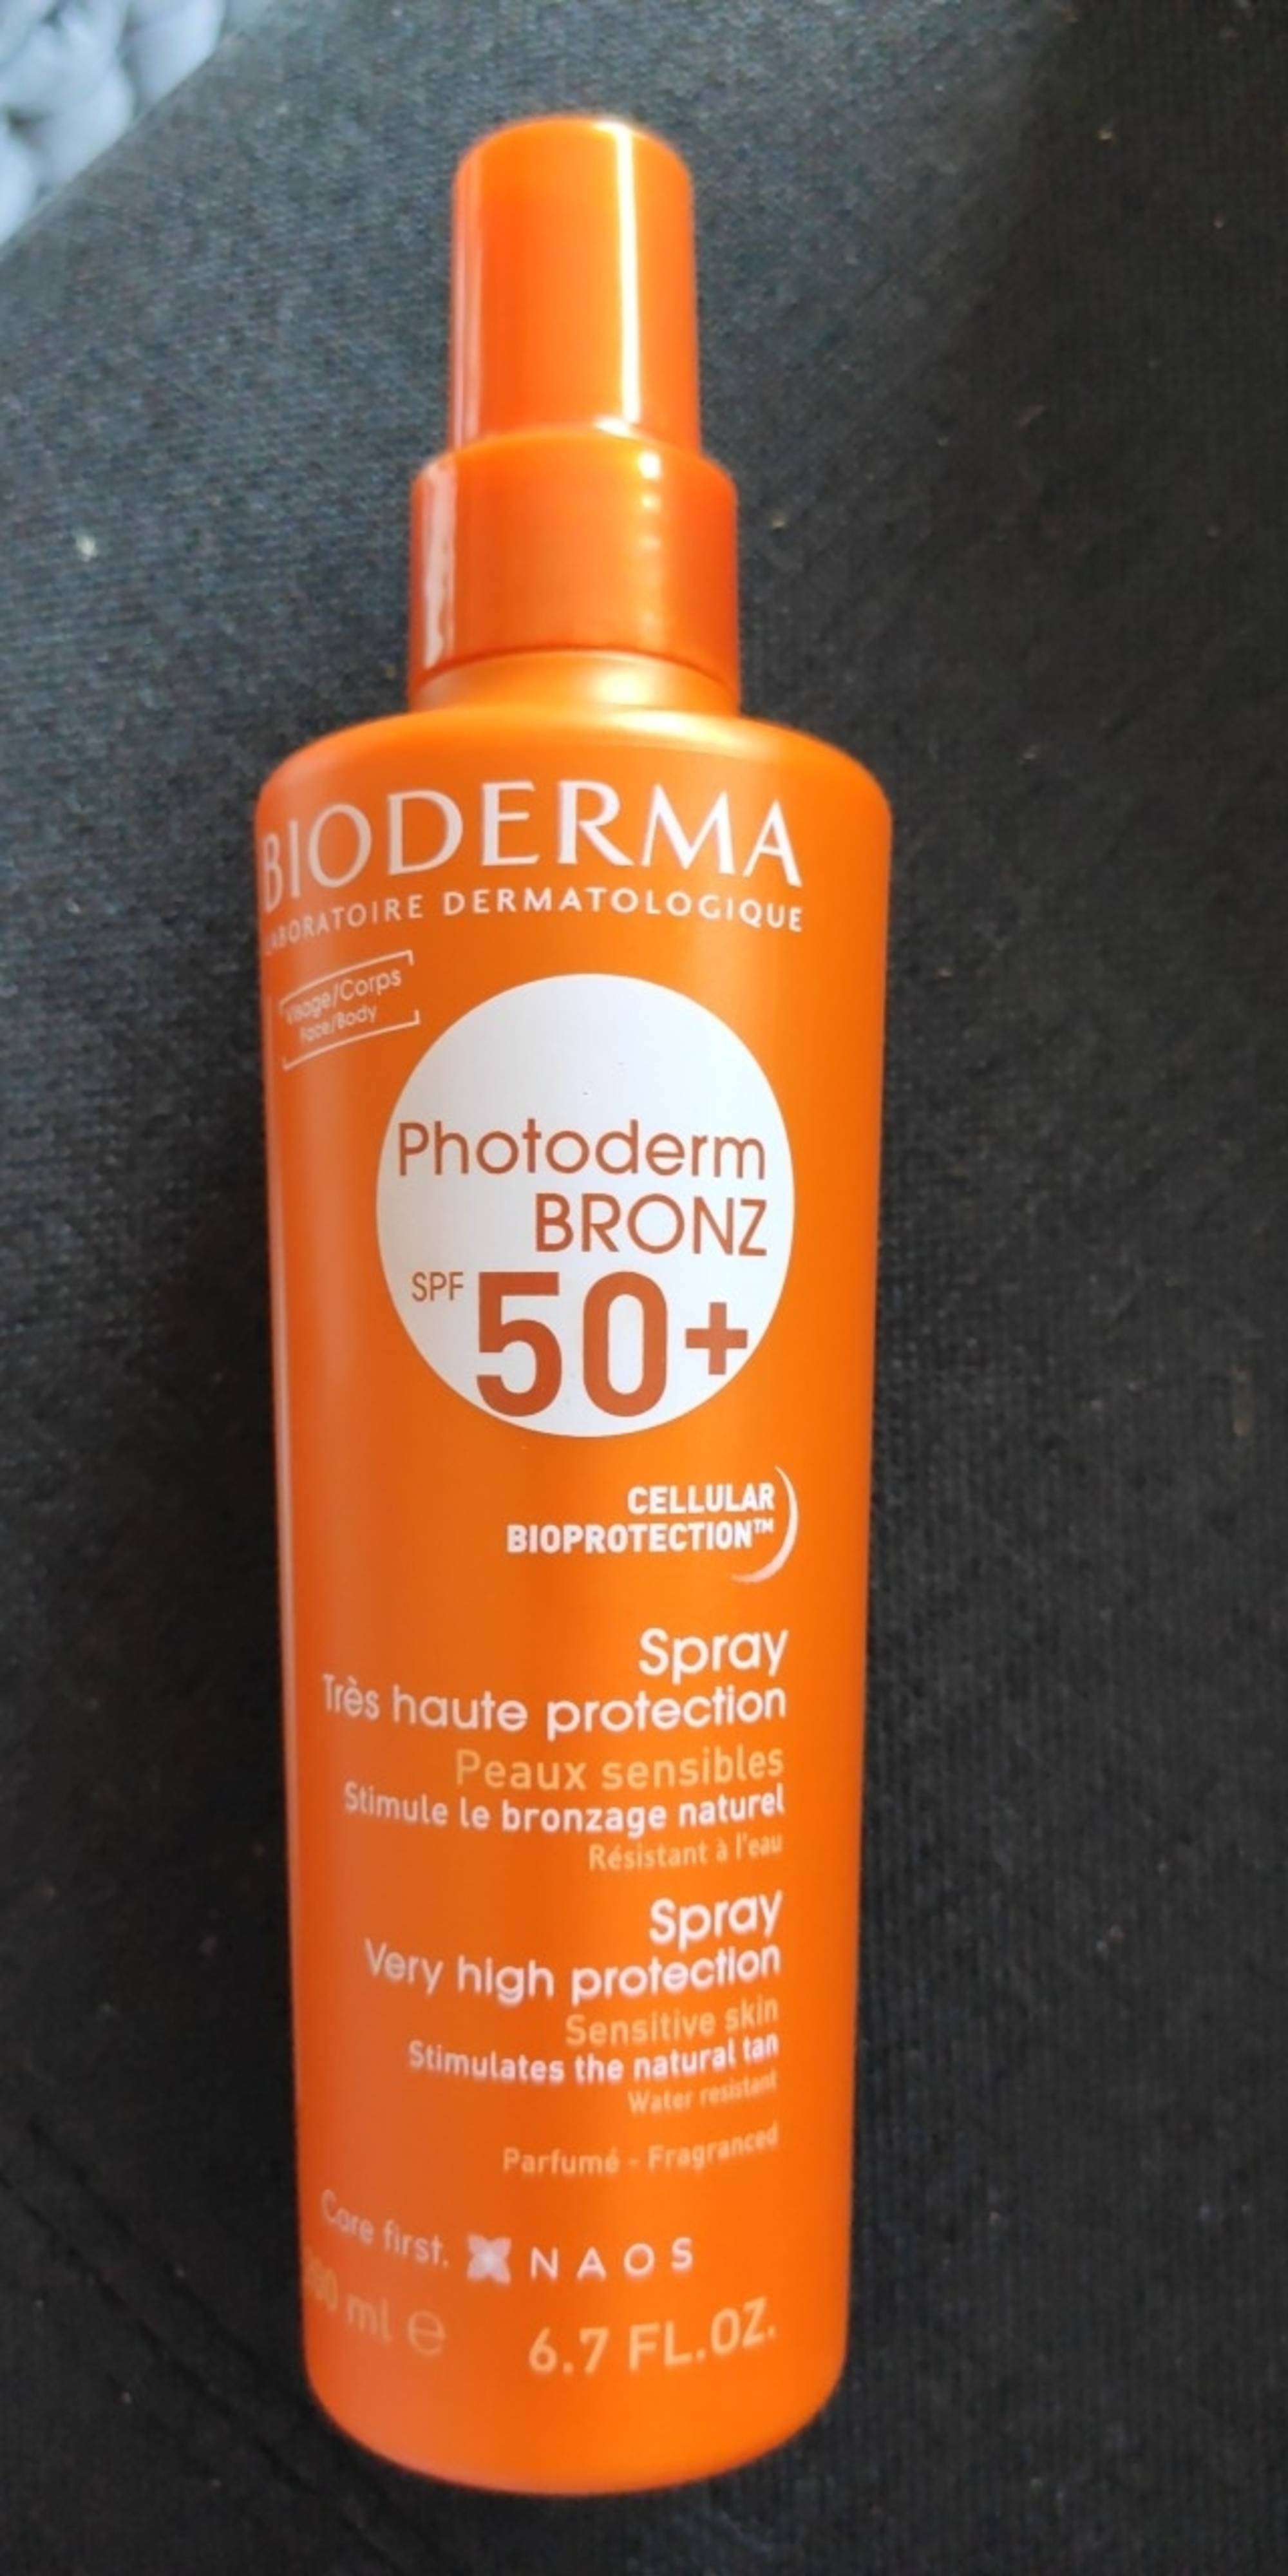 BIODERMA - Photoderm bronz SPF 50+ - Spray très haute protection